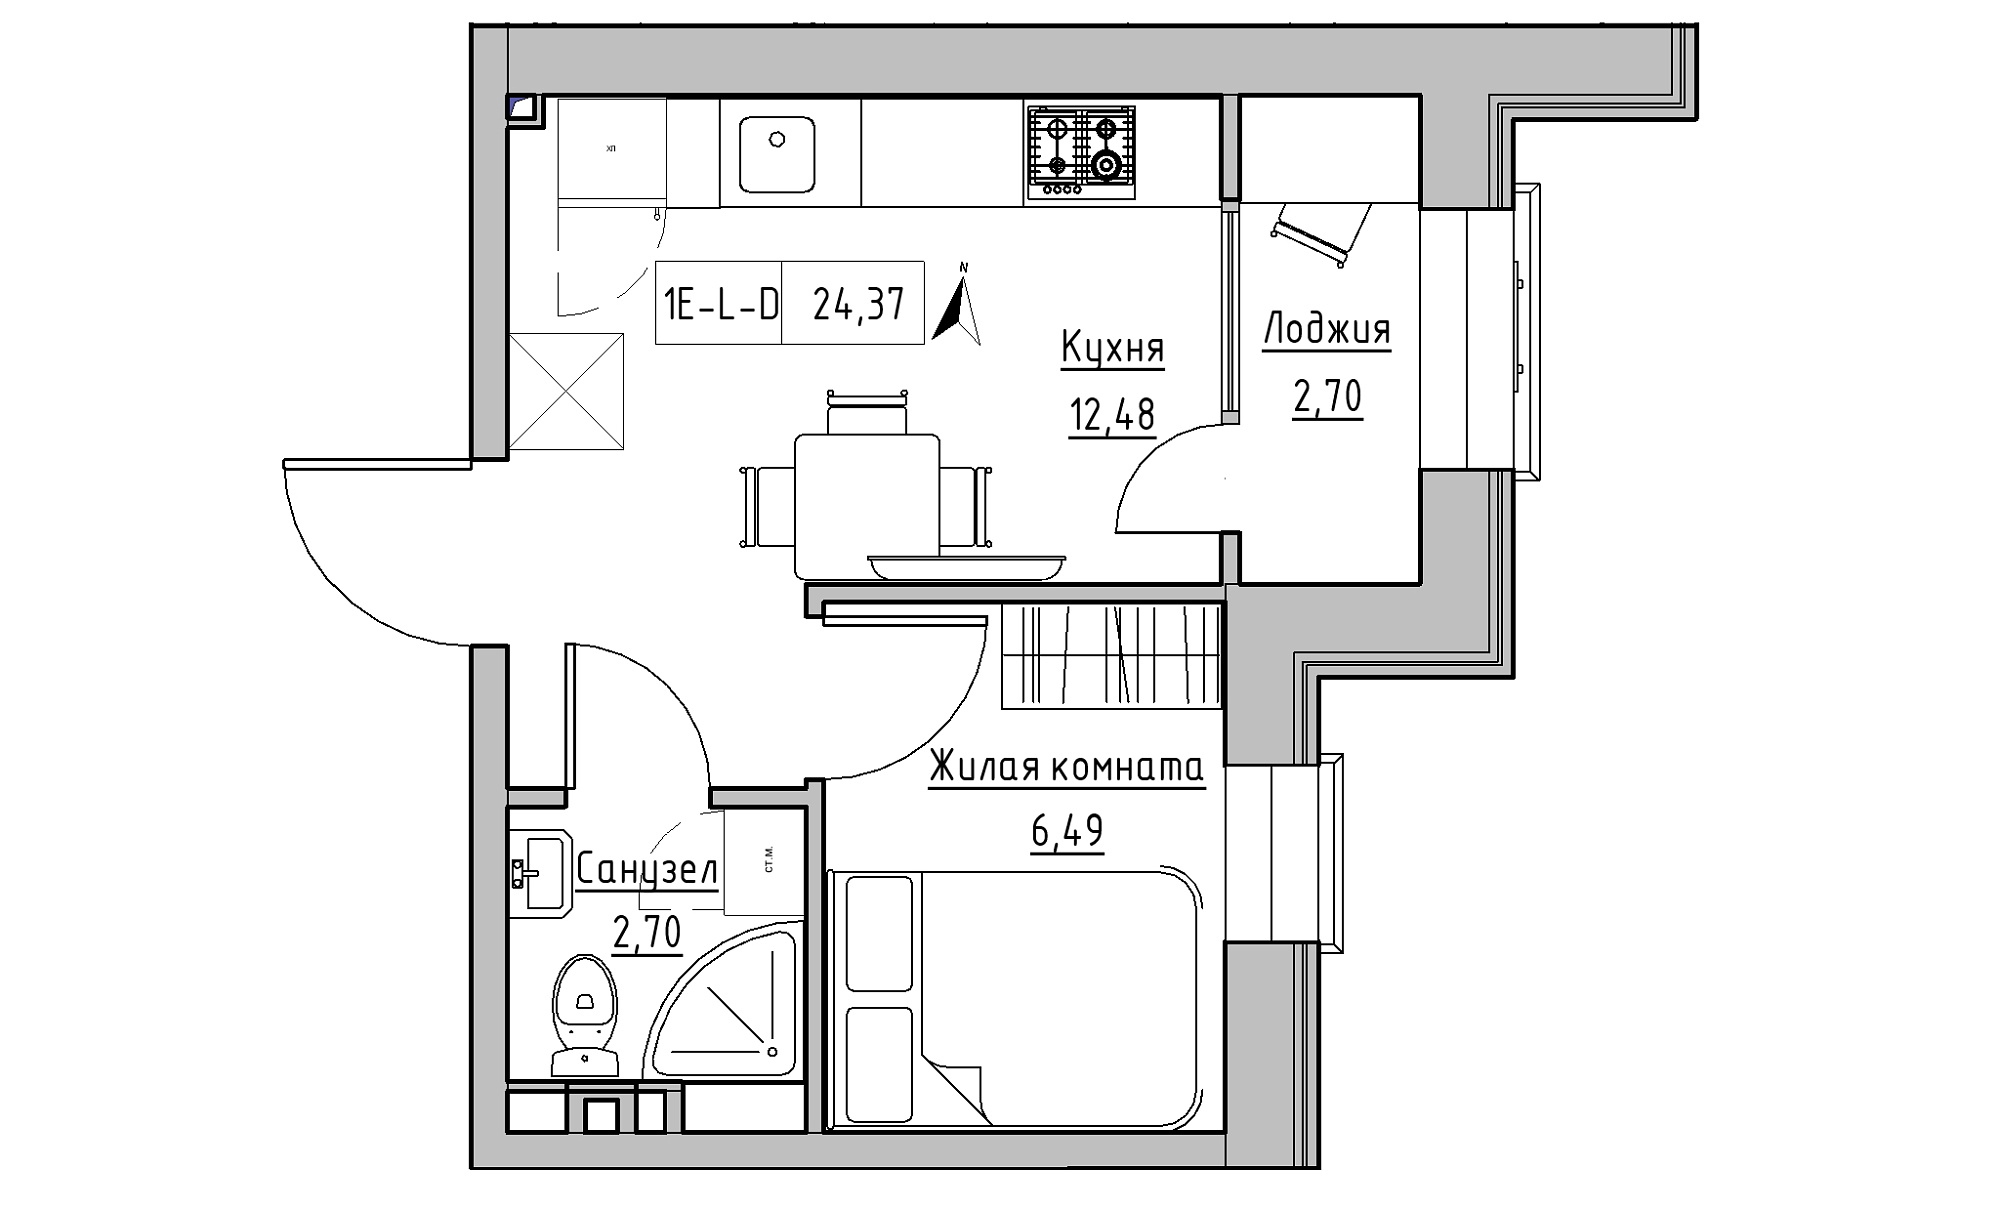 Planning 1-rm flats area 24.37m2, KS-016-03/0015.